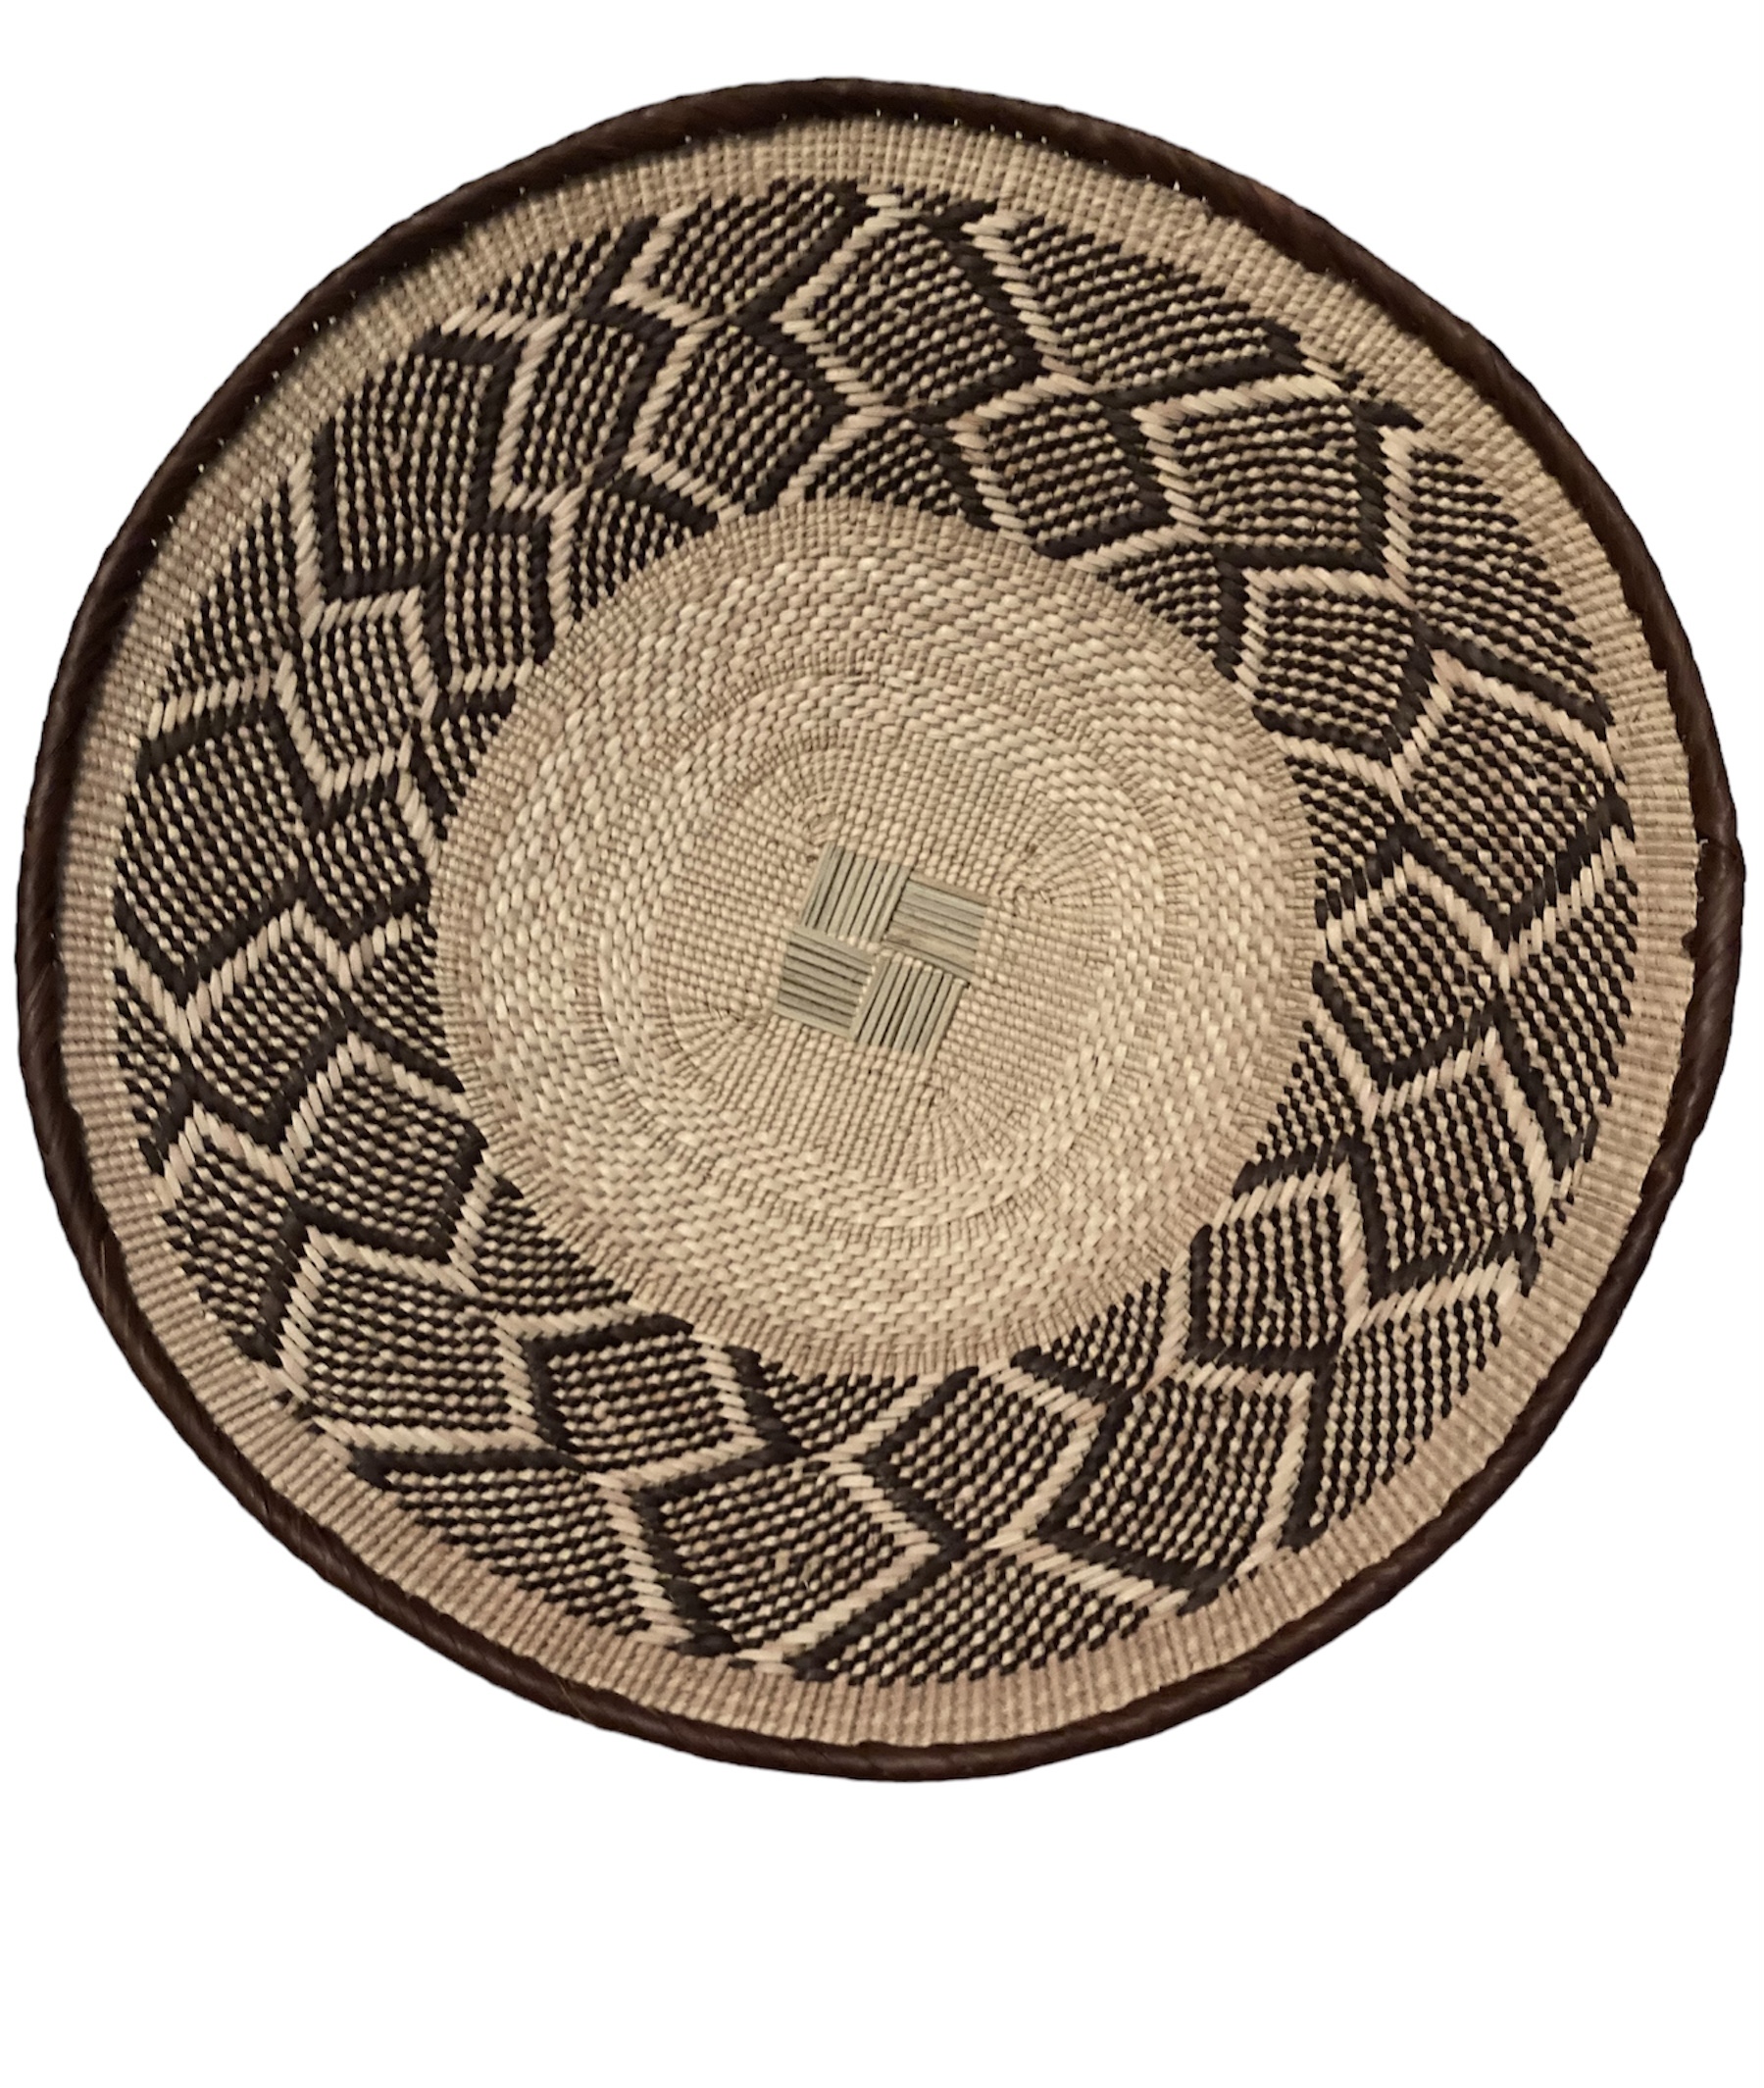 Tonga Basket from Zimbabwe - Design #008 - 15 /12" dia.